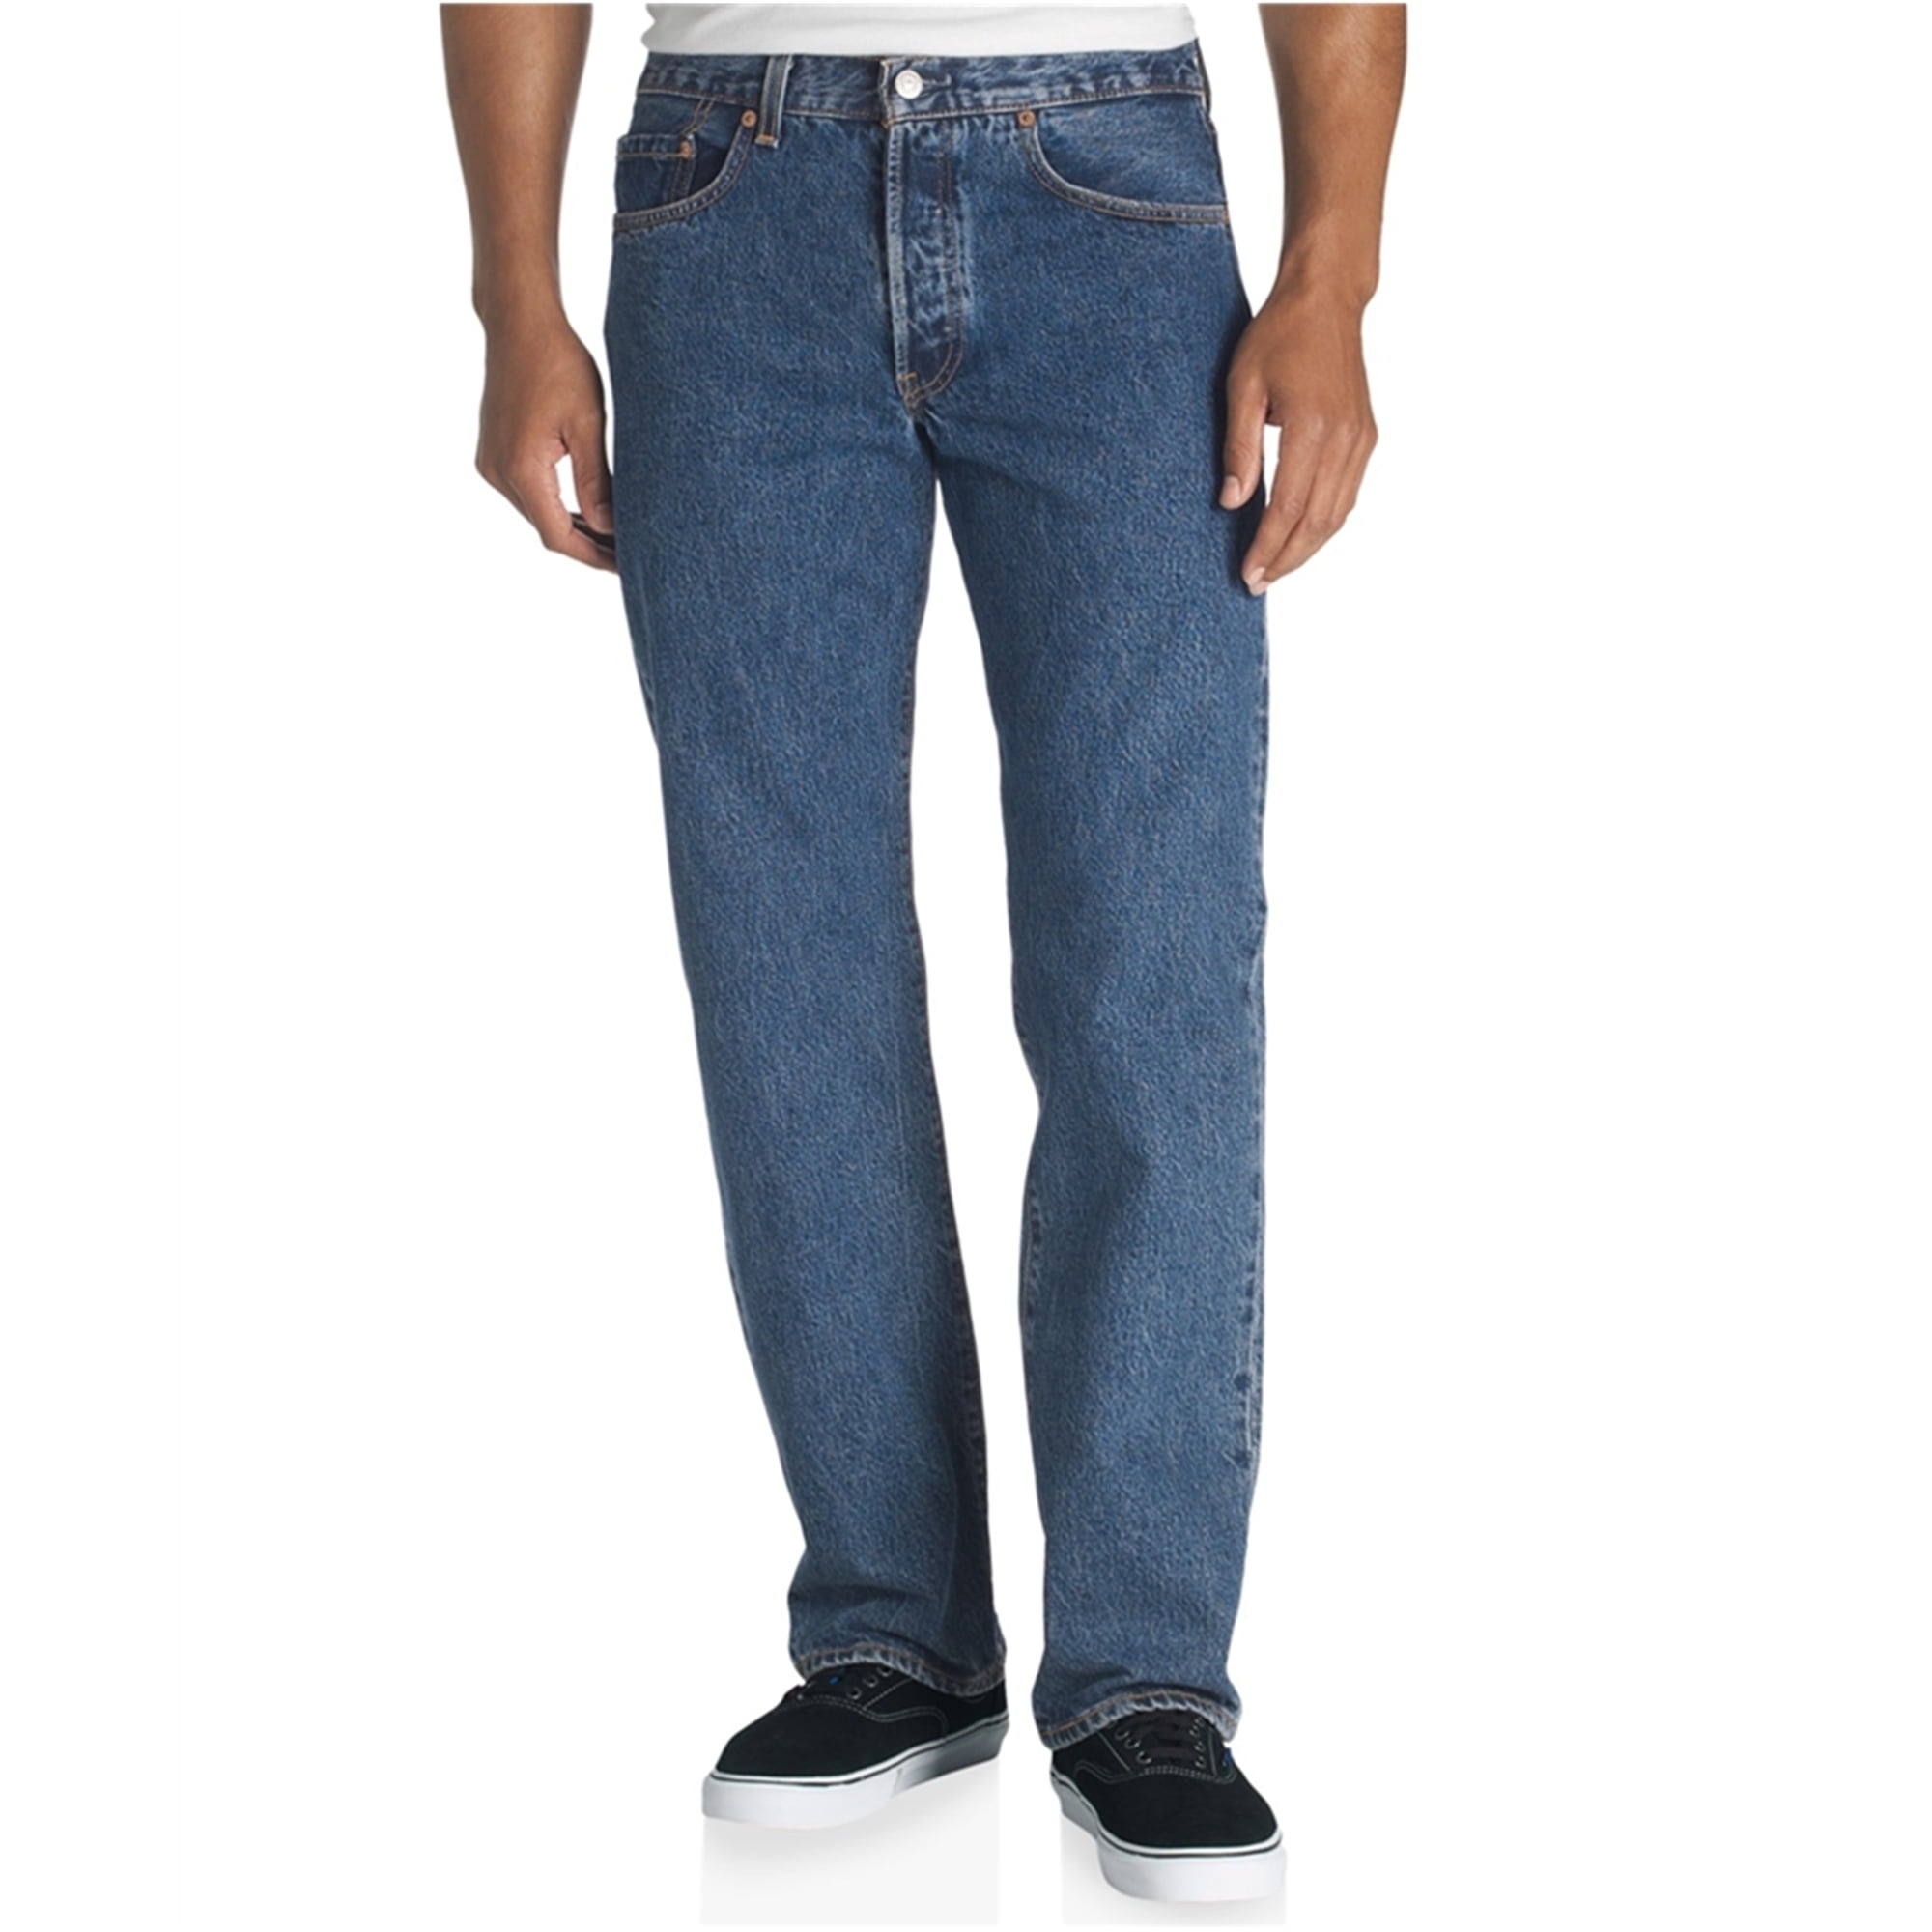 Levi Strauss Mens Original Fit 501 Jeans 38x36 Dark Stonewash